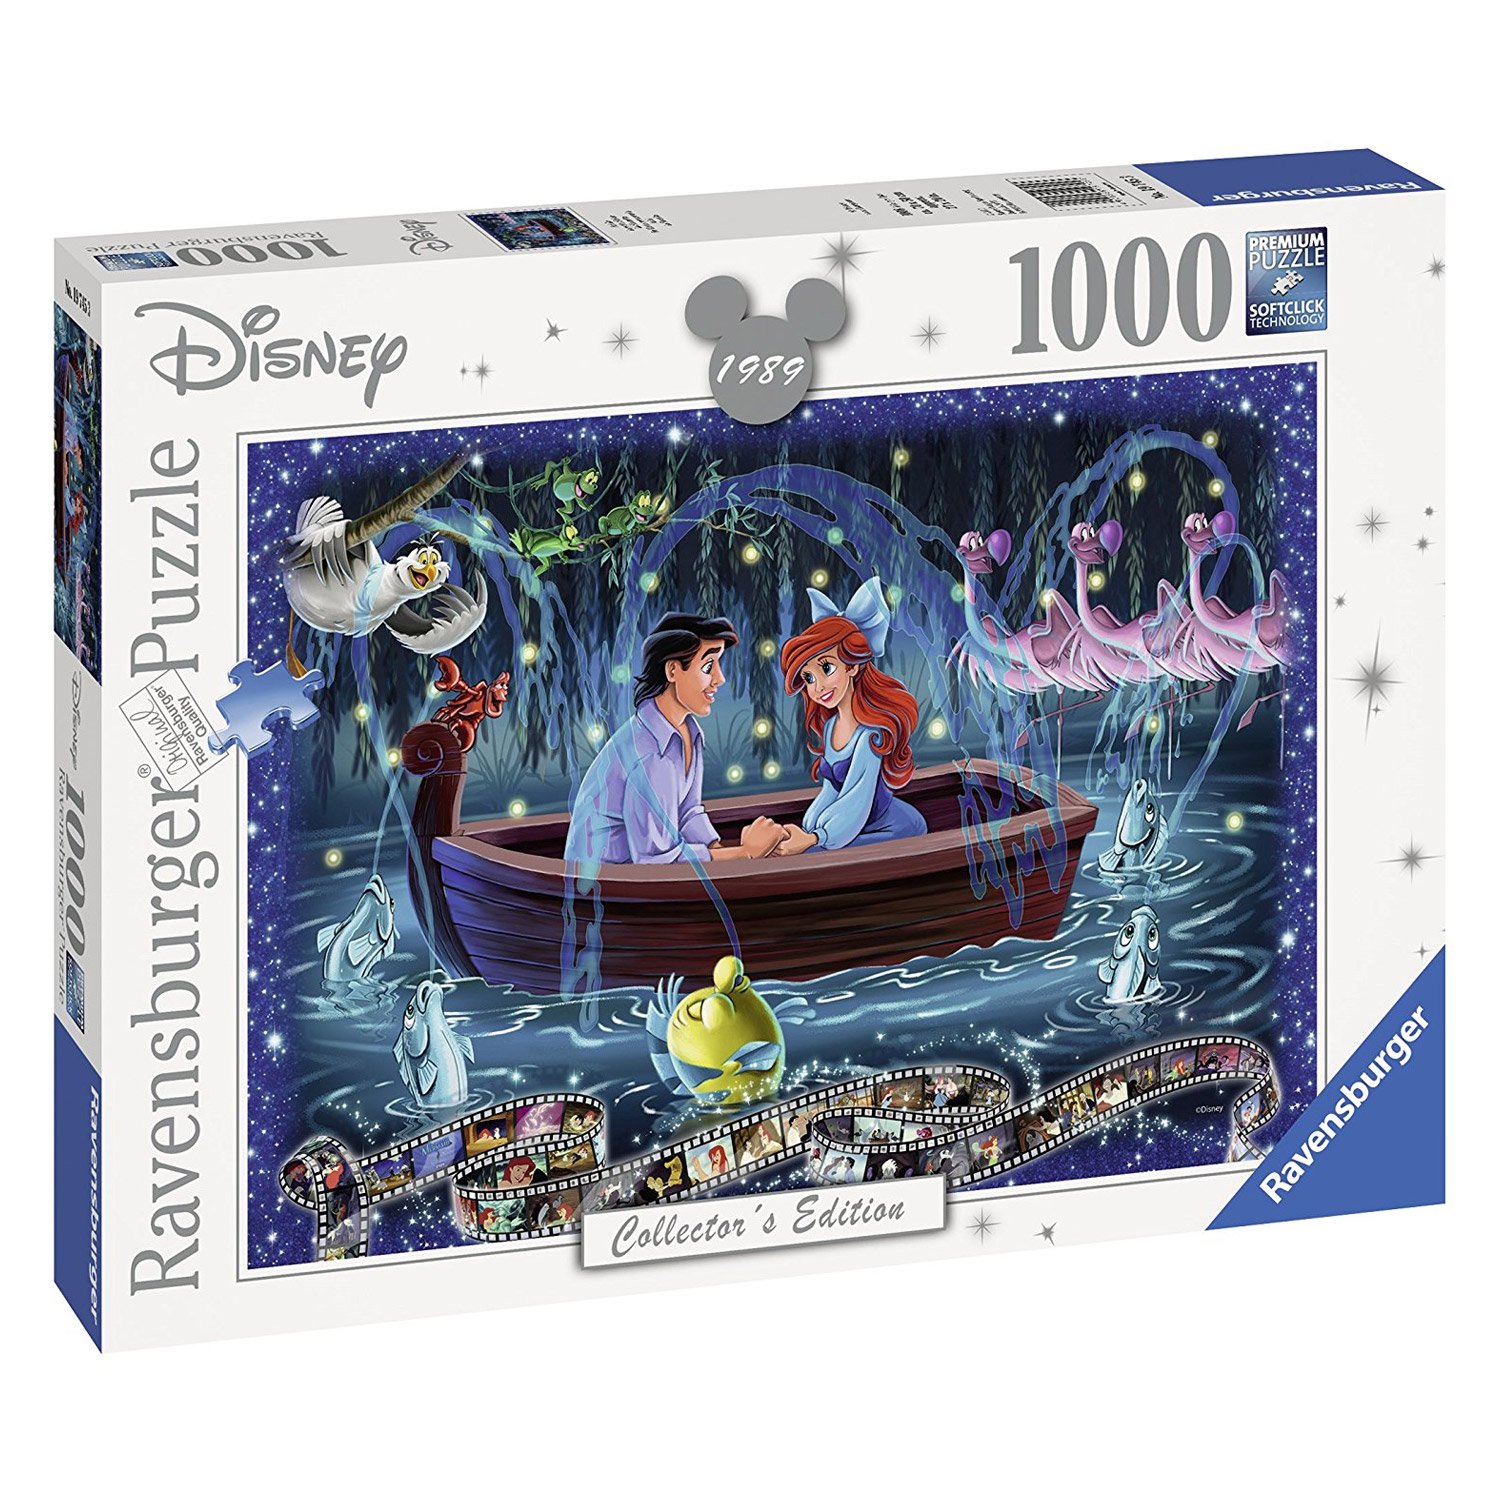 Puzzle 1000 pièces : Disney Collector's Edition : La petite Sirène